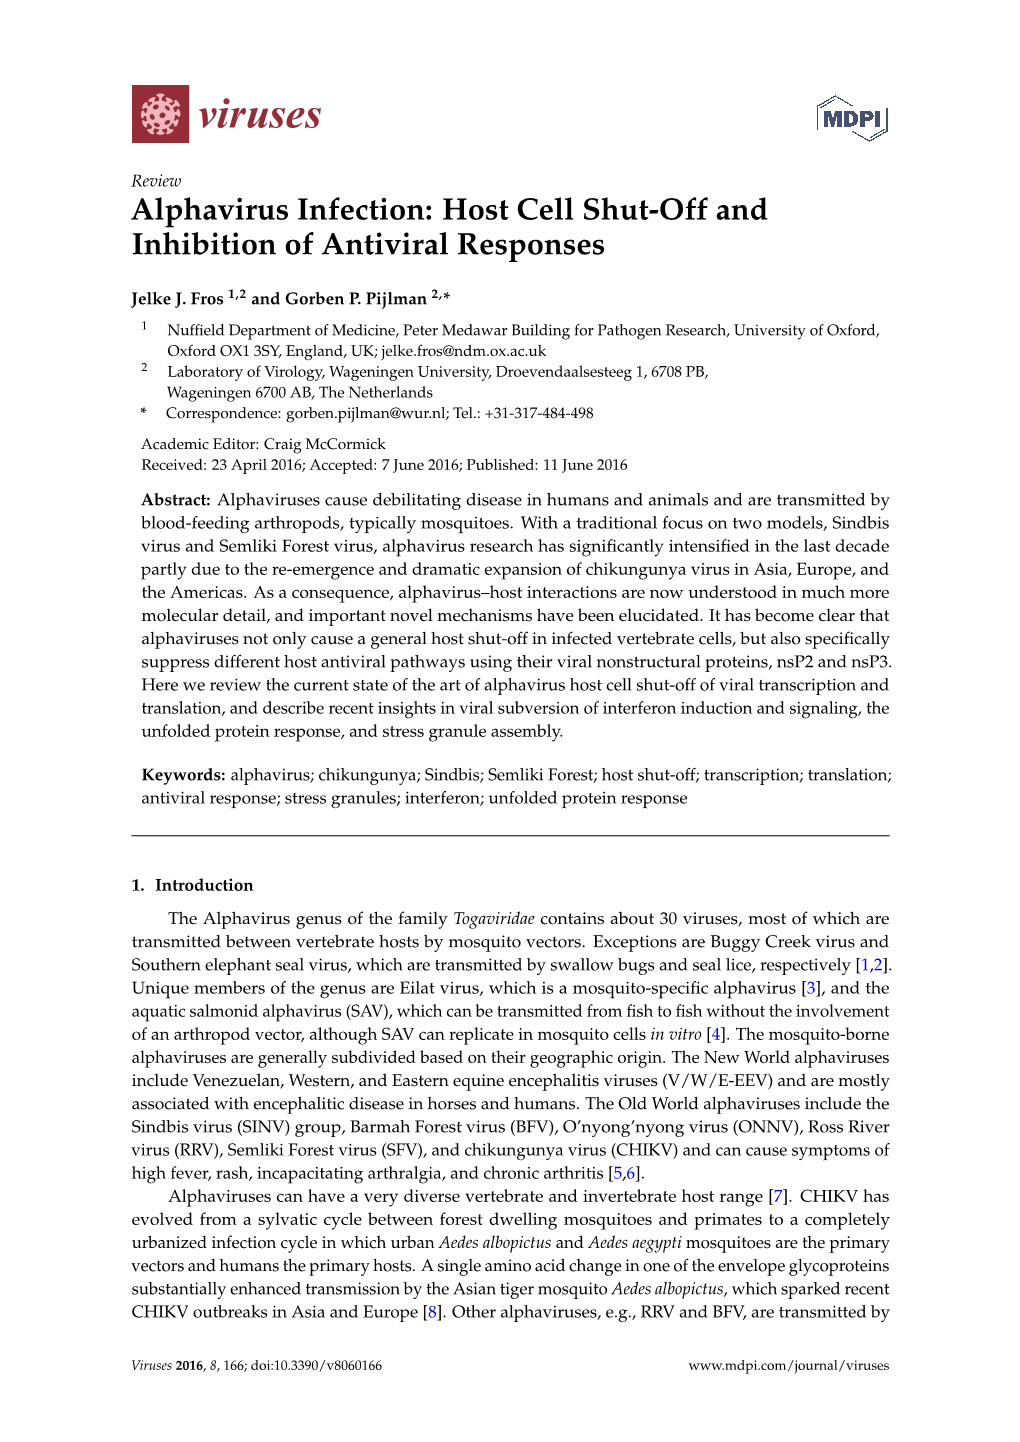 Alphavirus Infection: Host Cell Shut-Off and Inhibition of Antiviral Responses